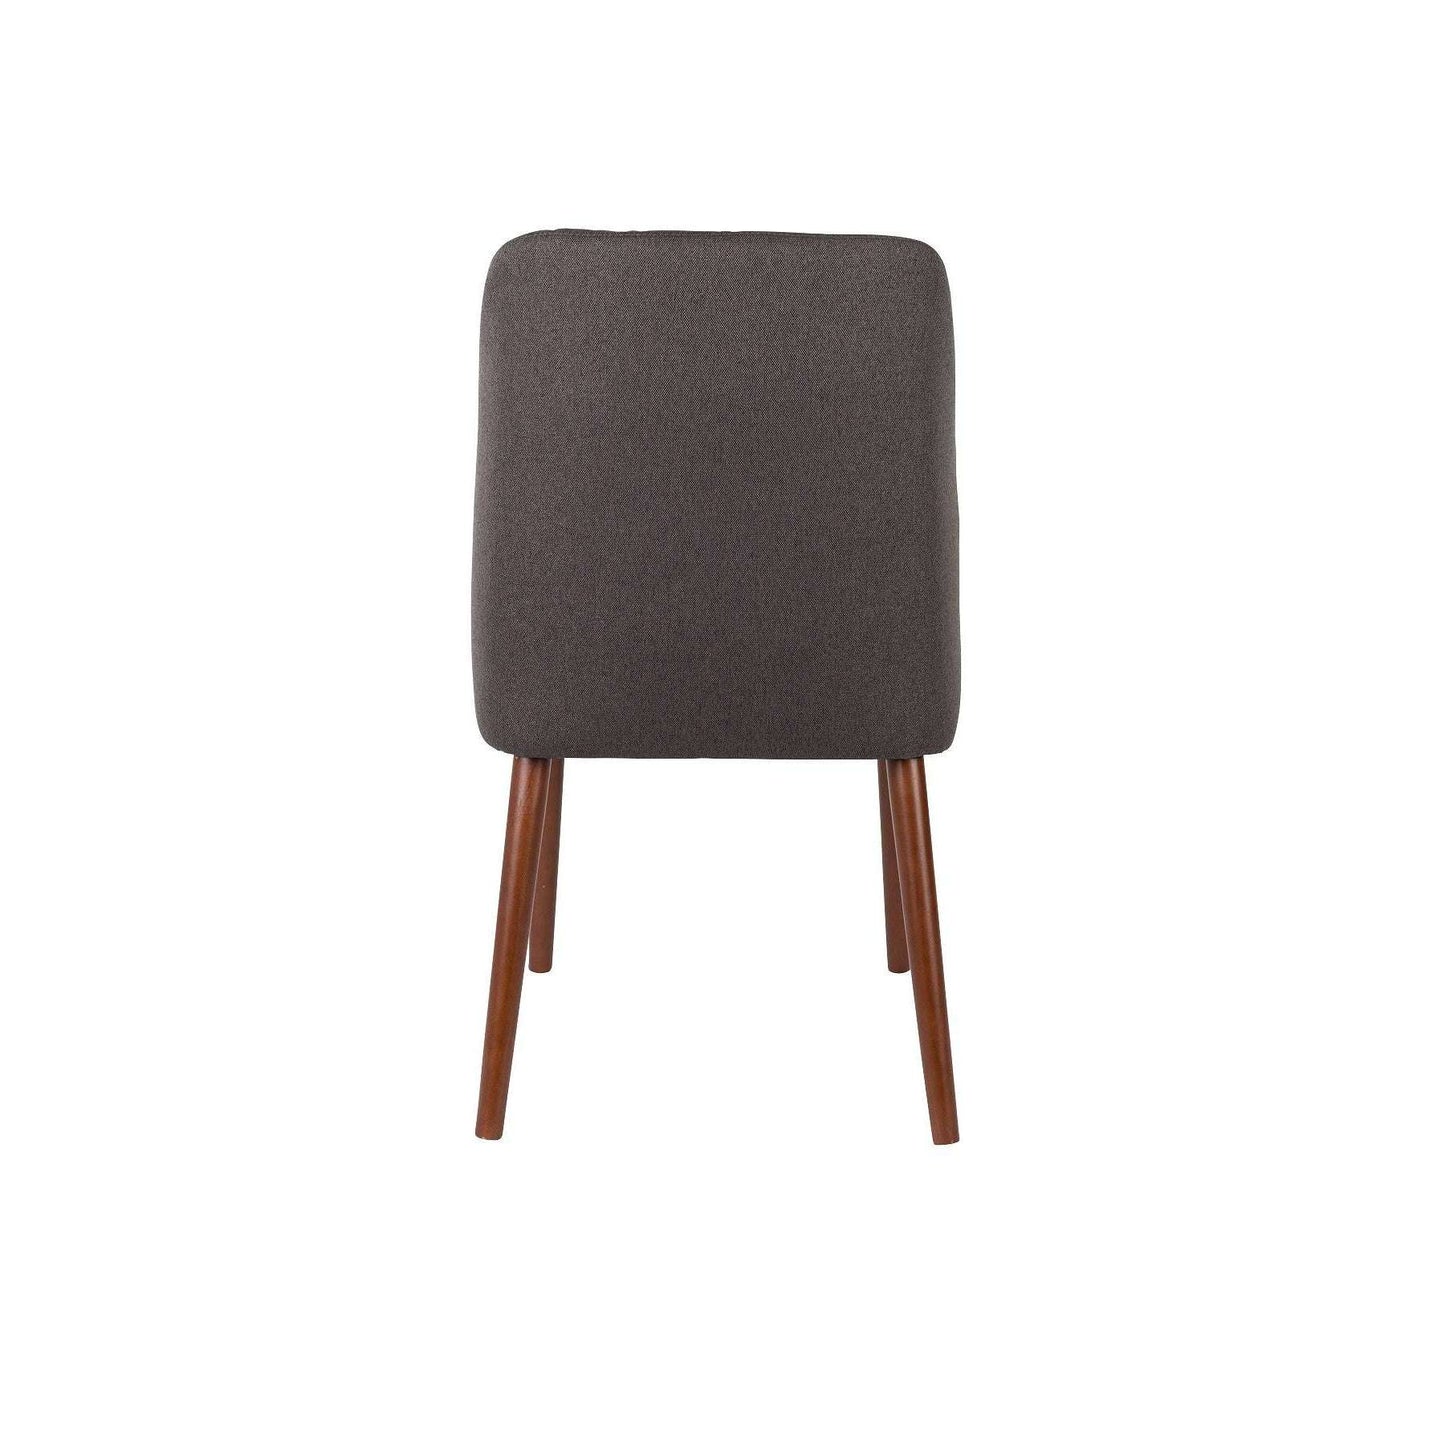 Staerkk stoel conway donker grijs 56 x 48 x 85 cm